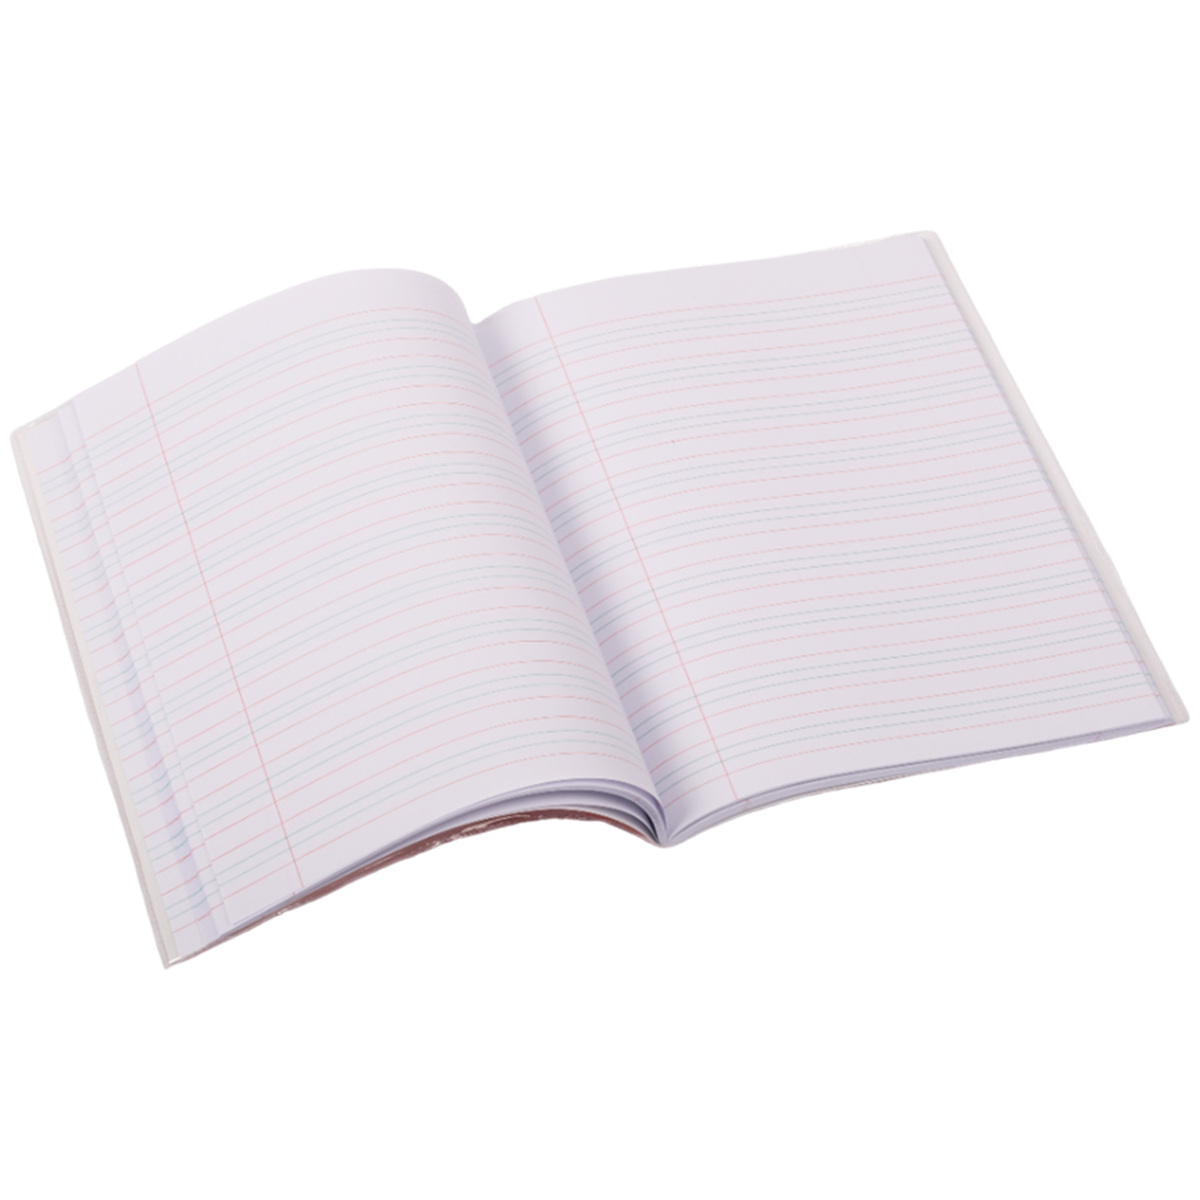 Sadaf Notebook Brown Cover Four Line 12 x 60 Sheets